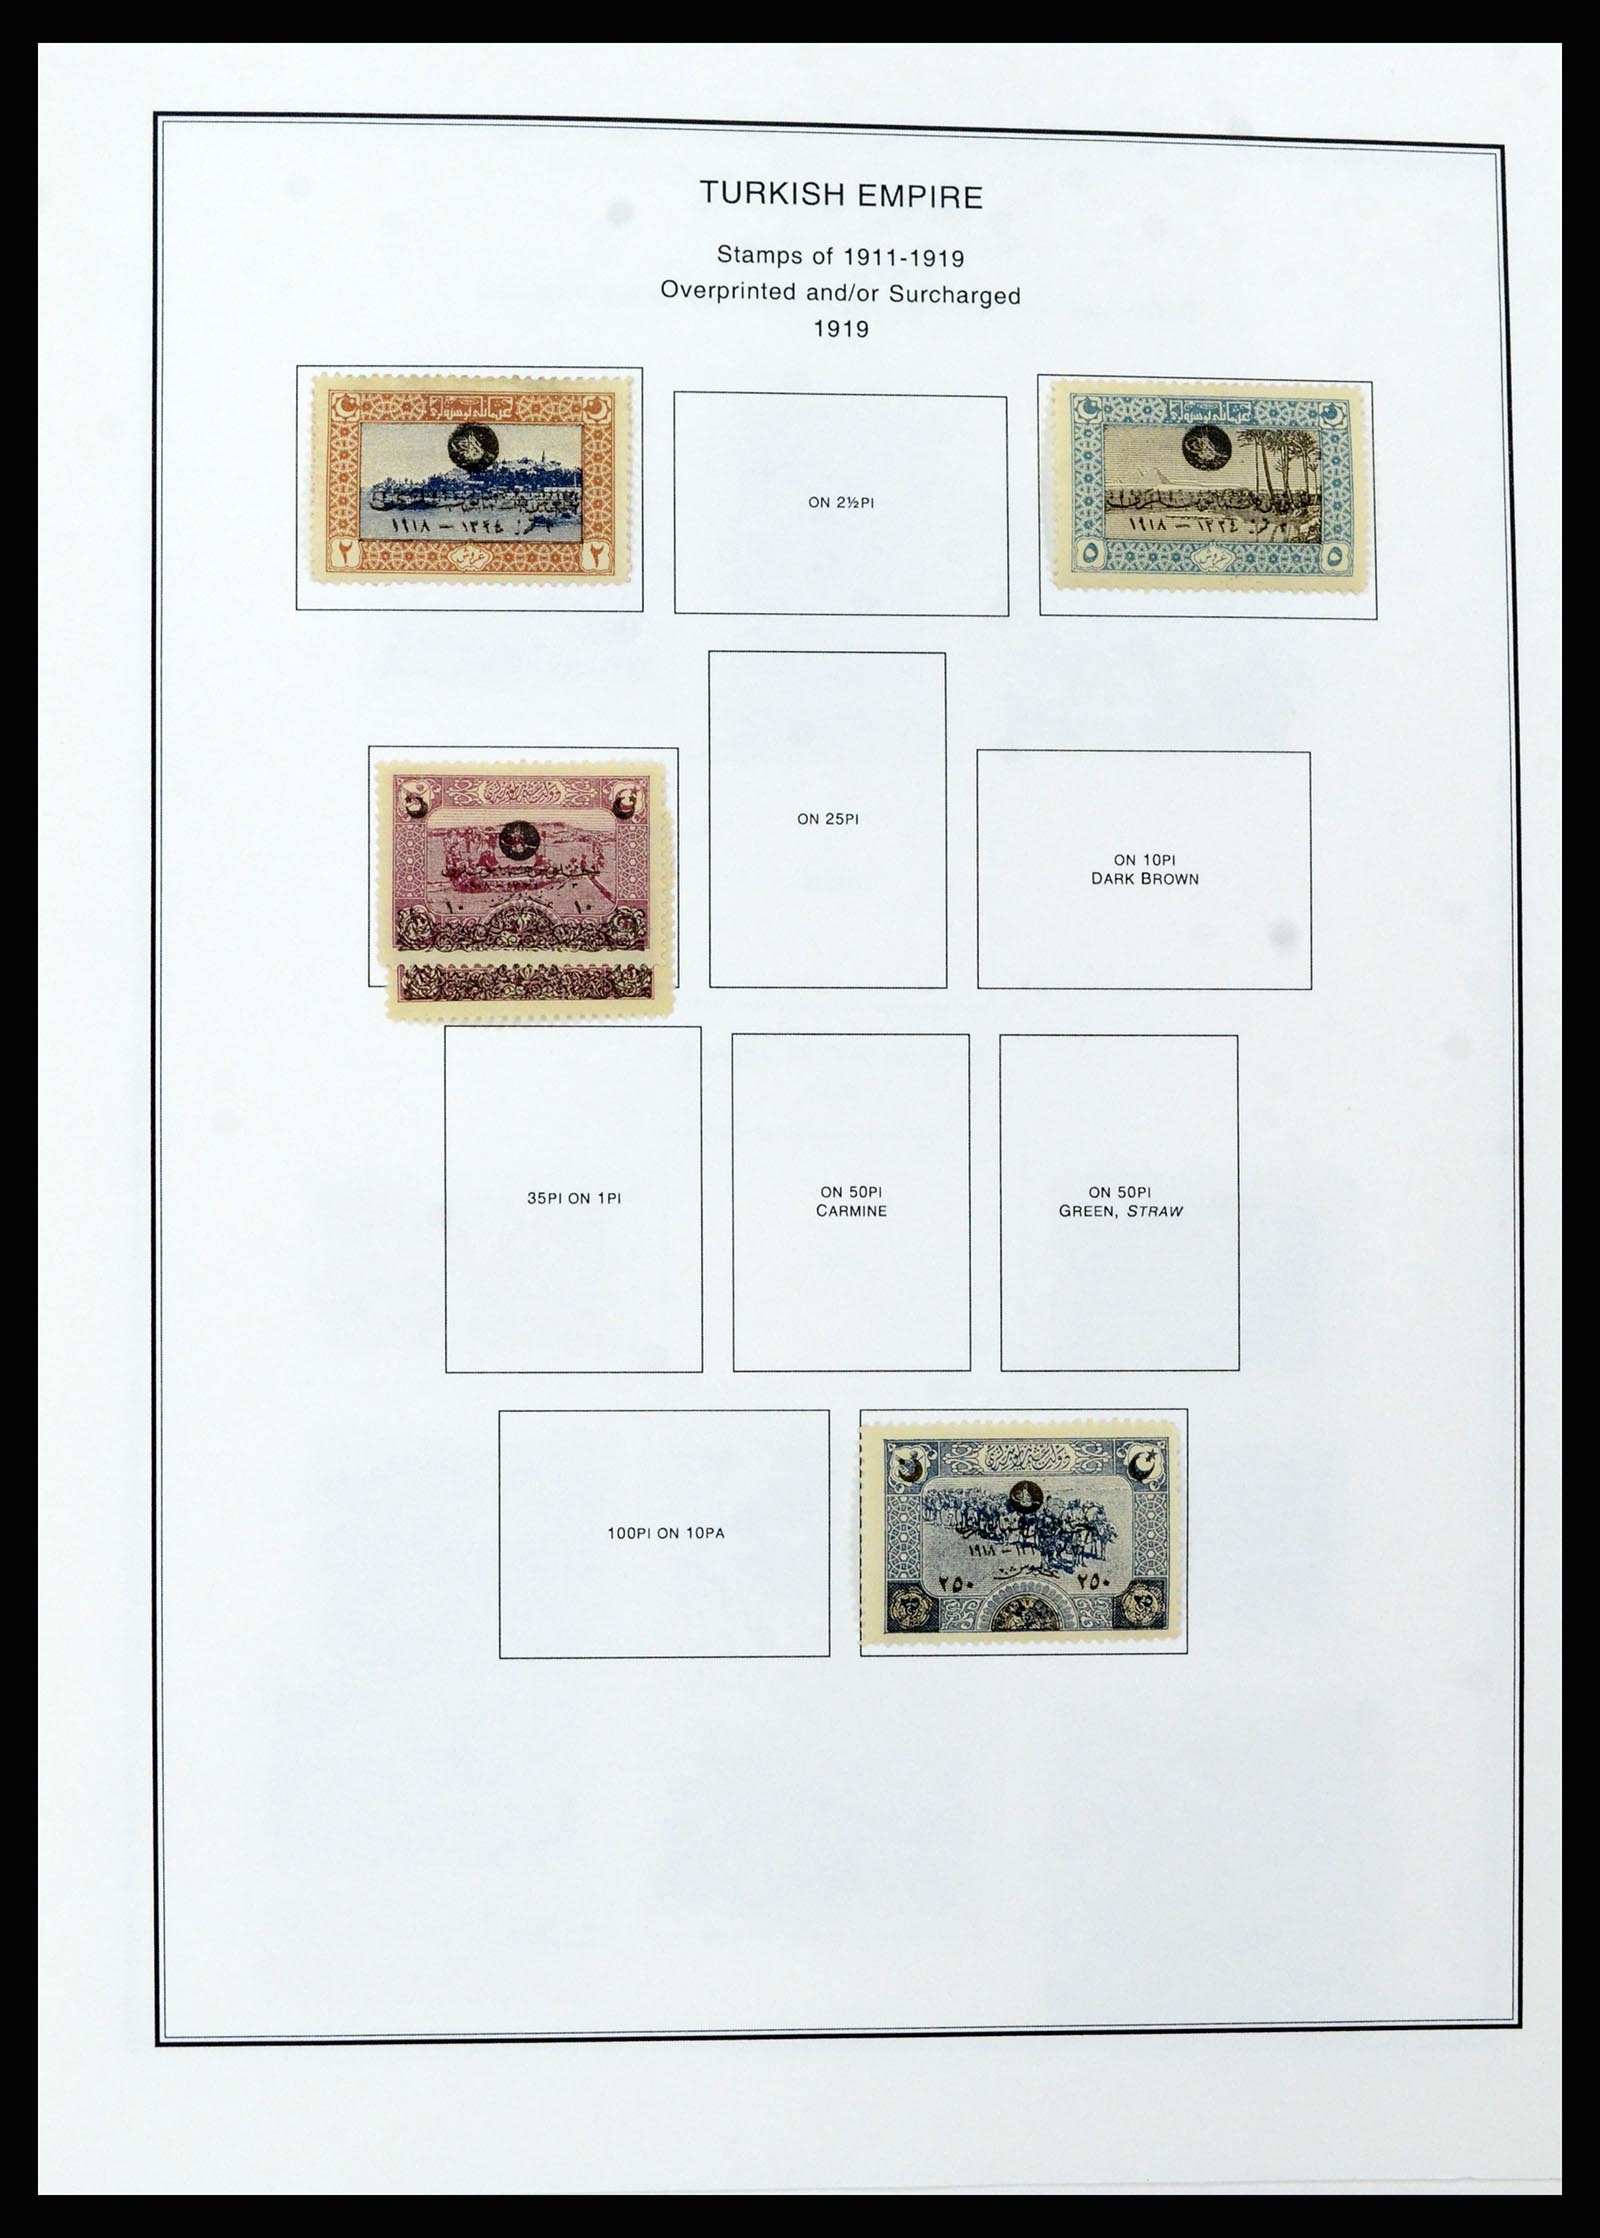 37224 033 - Stamp collection 37224 Turkey 1863-2000.